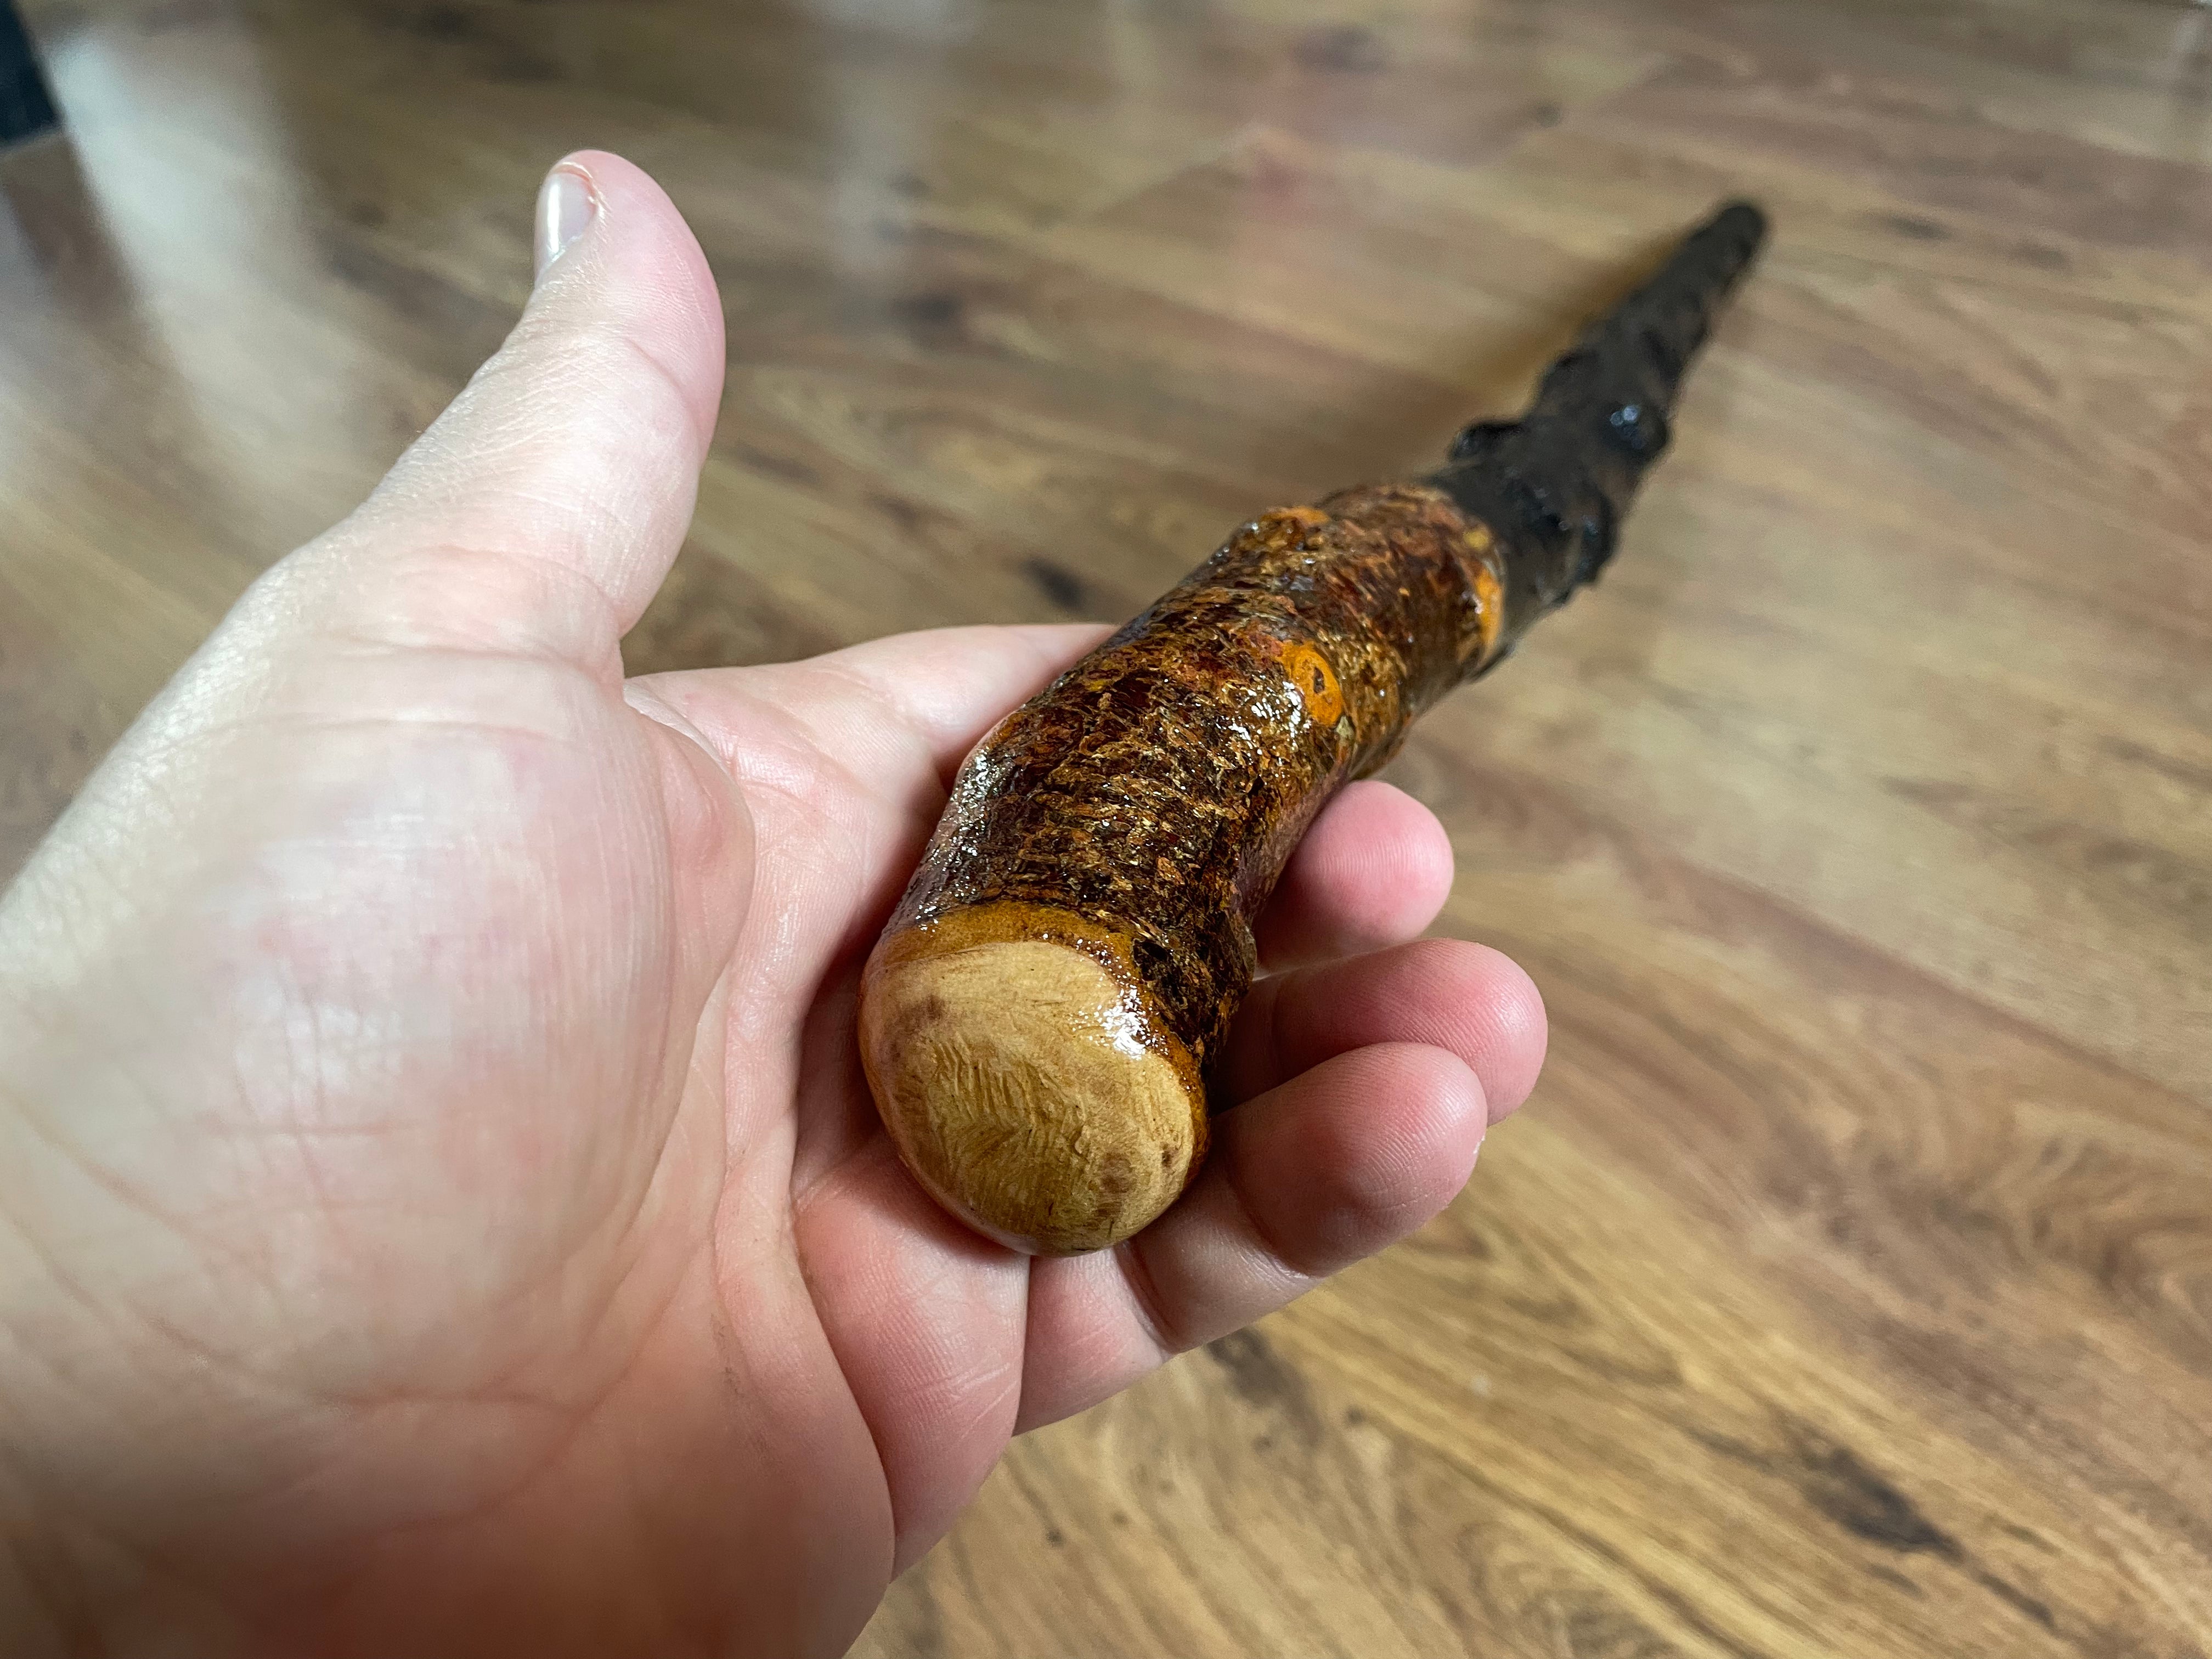 Blackthorn Walking Stick 30 1/2 inch - Handmade in Ireland